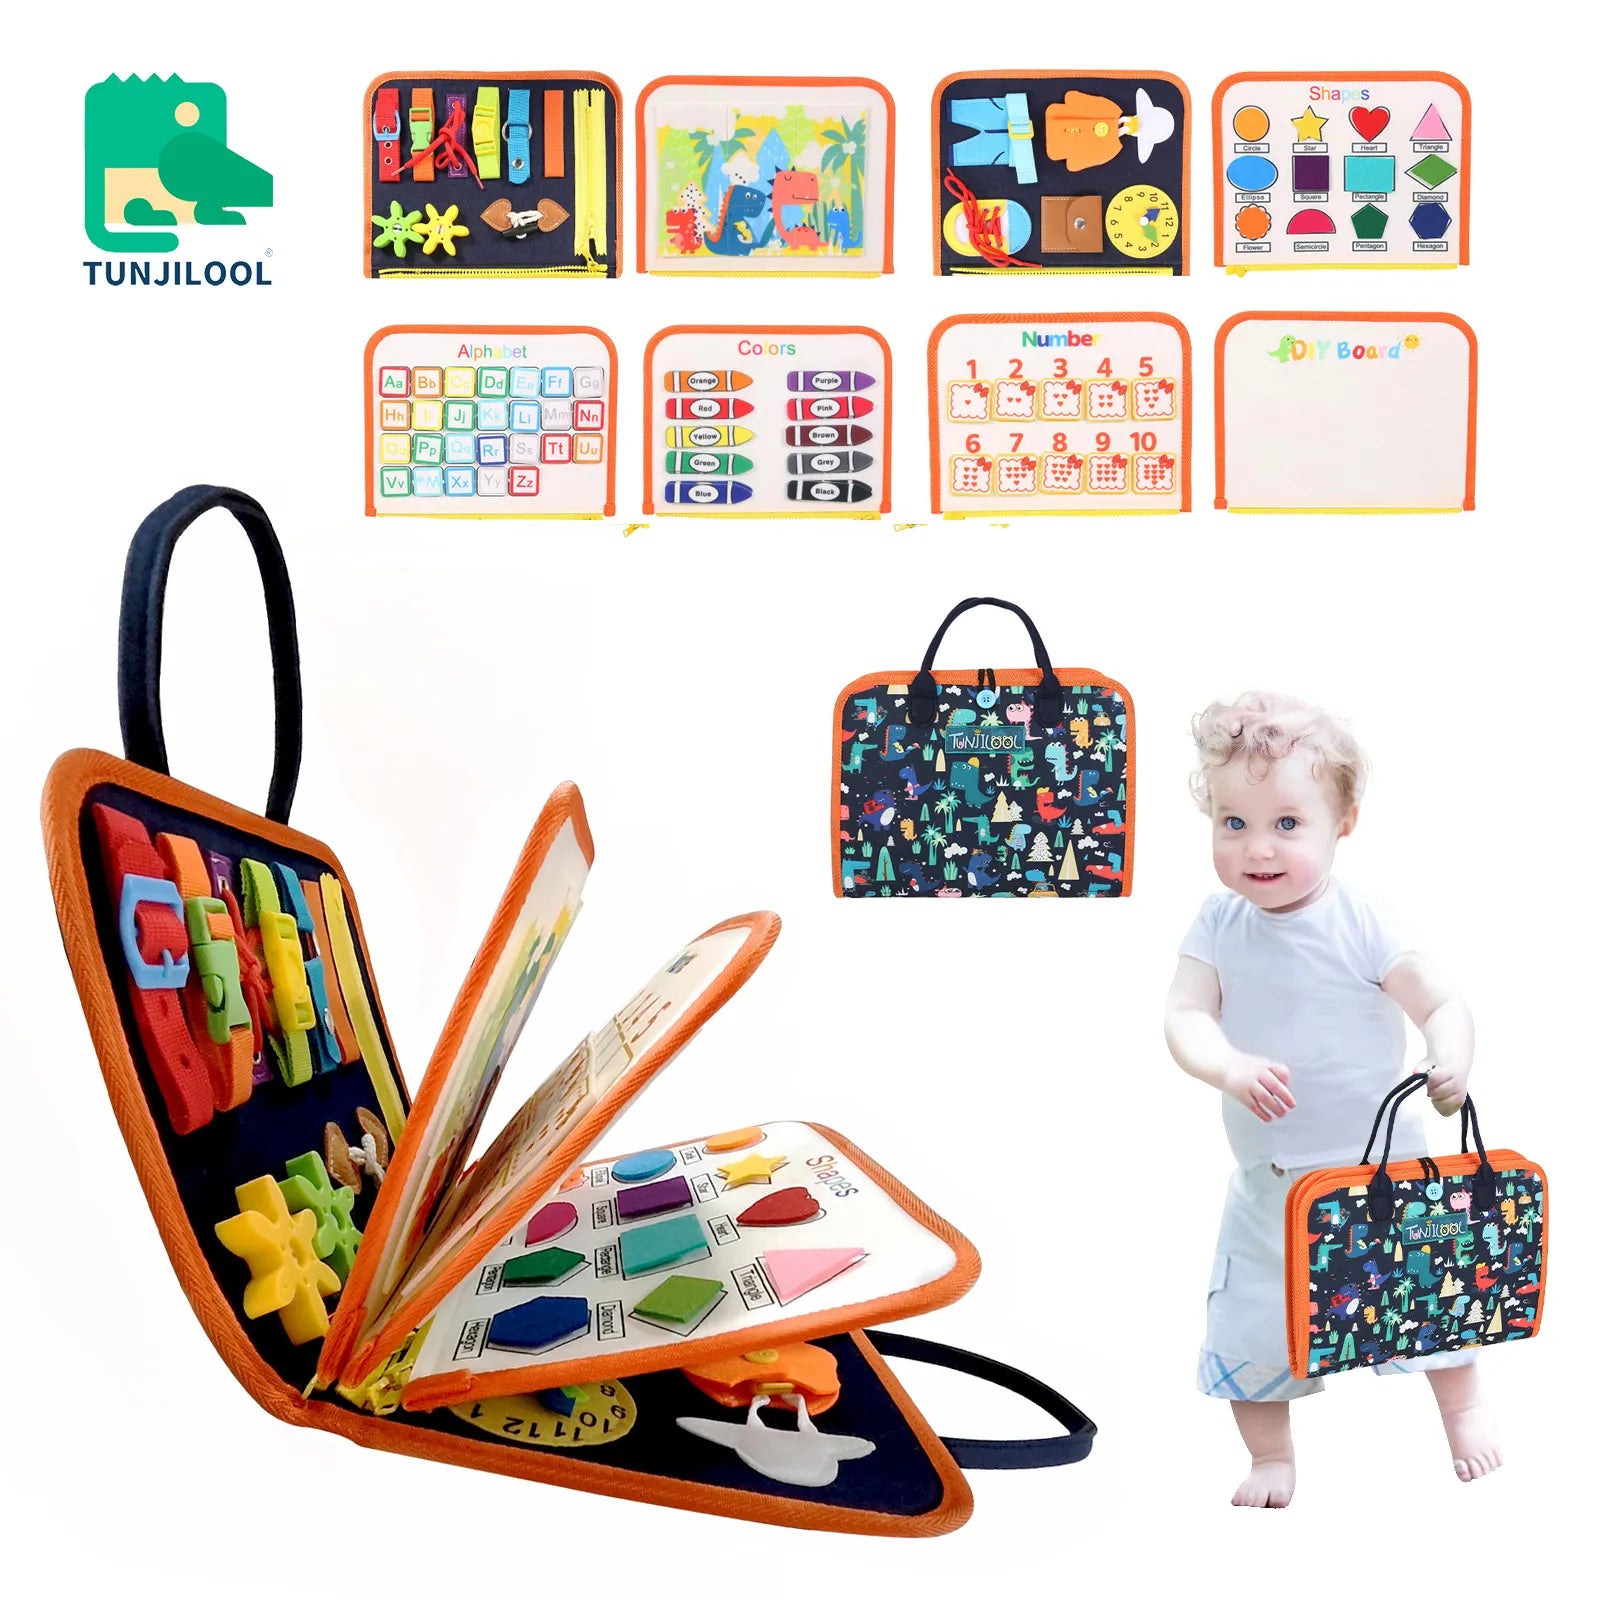 TUNJILOOL Montessori Busy Board: Interactive Educational Toy for Toddlers  petlums.com   